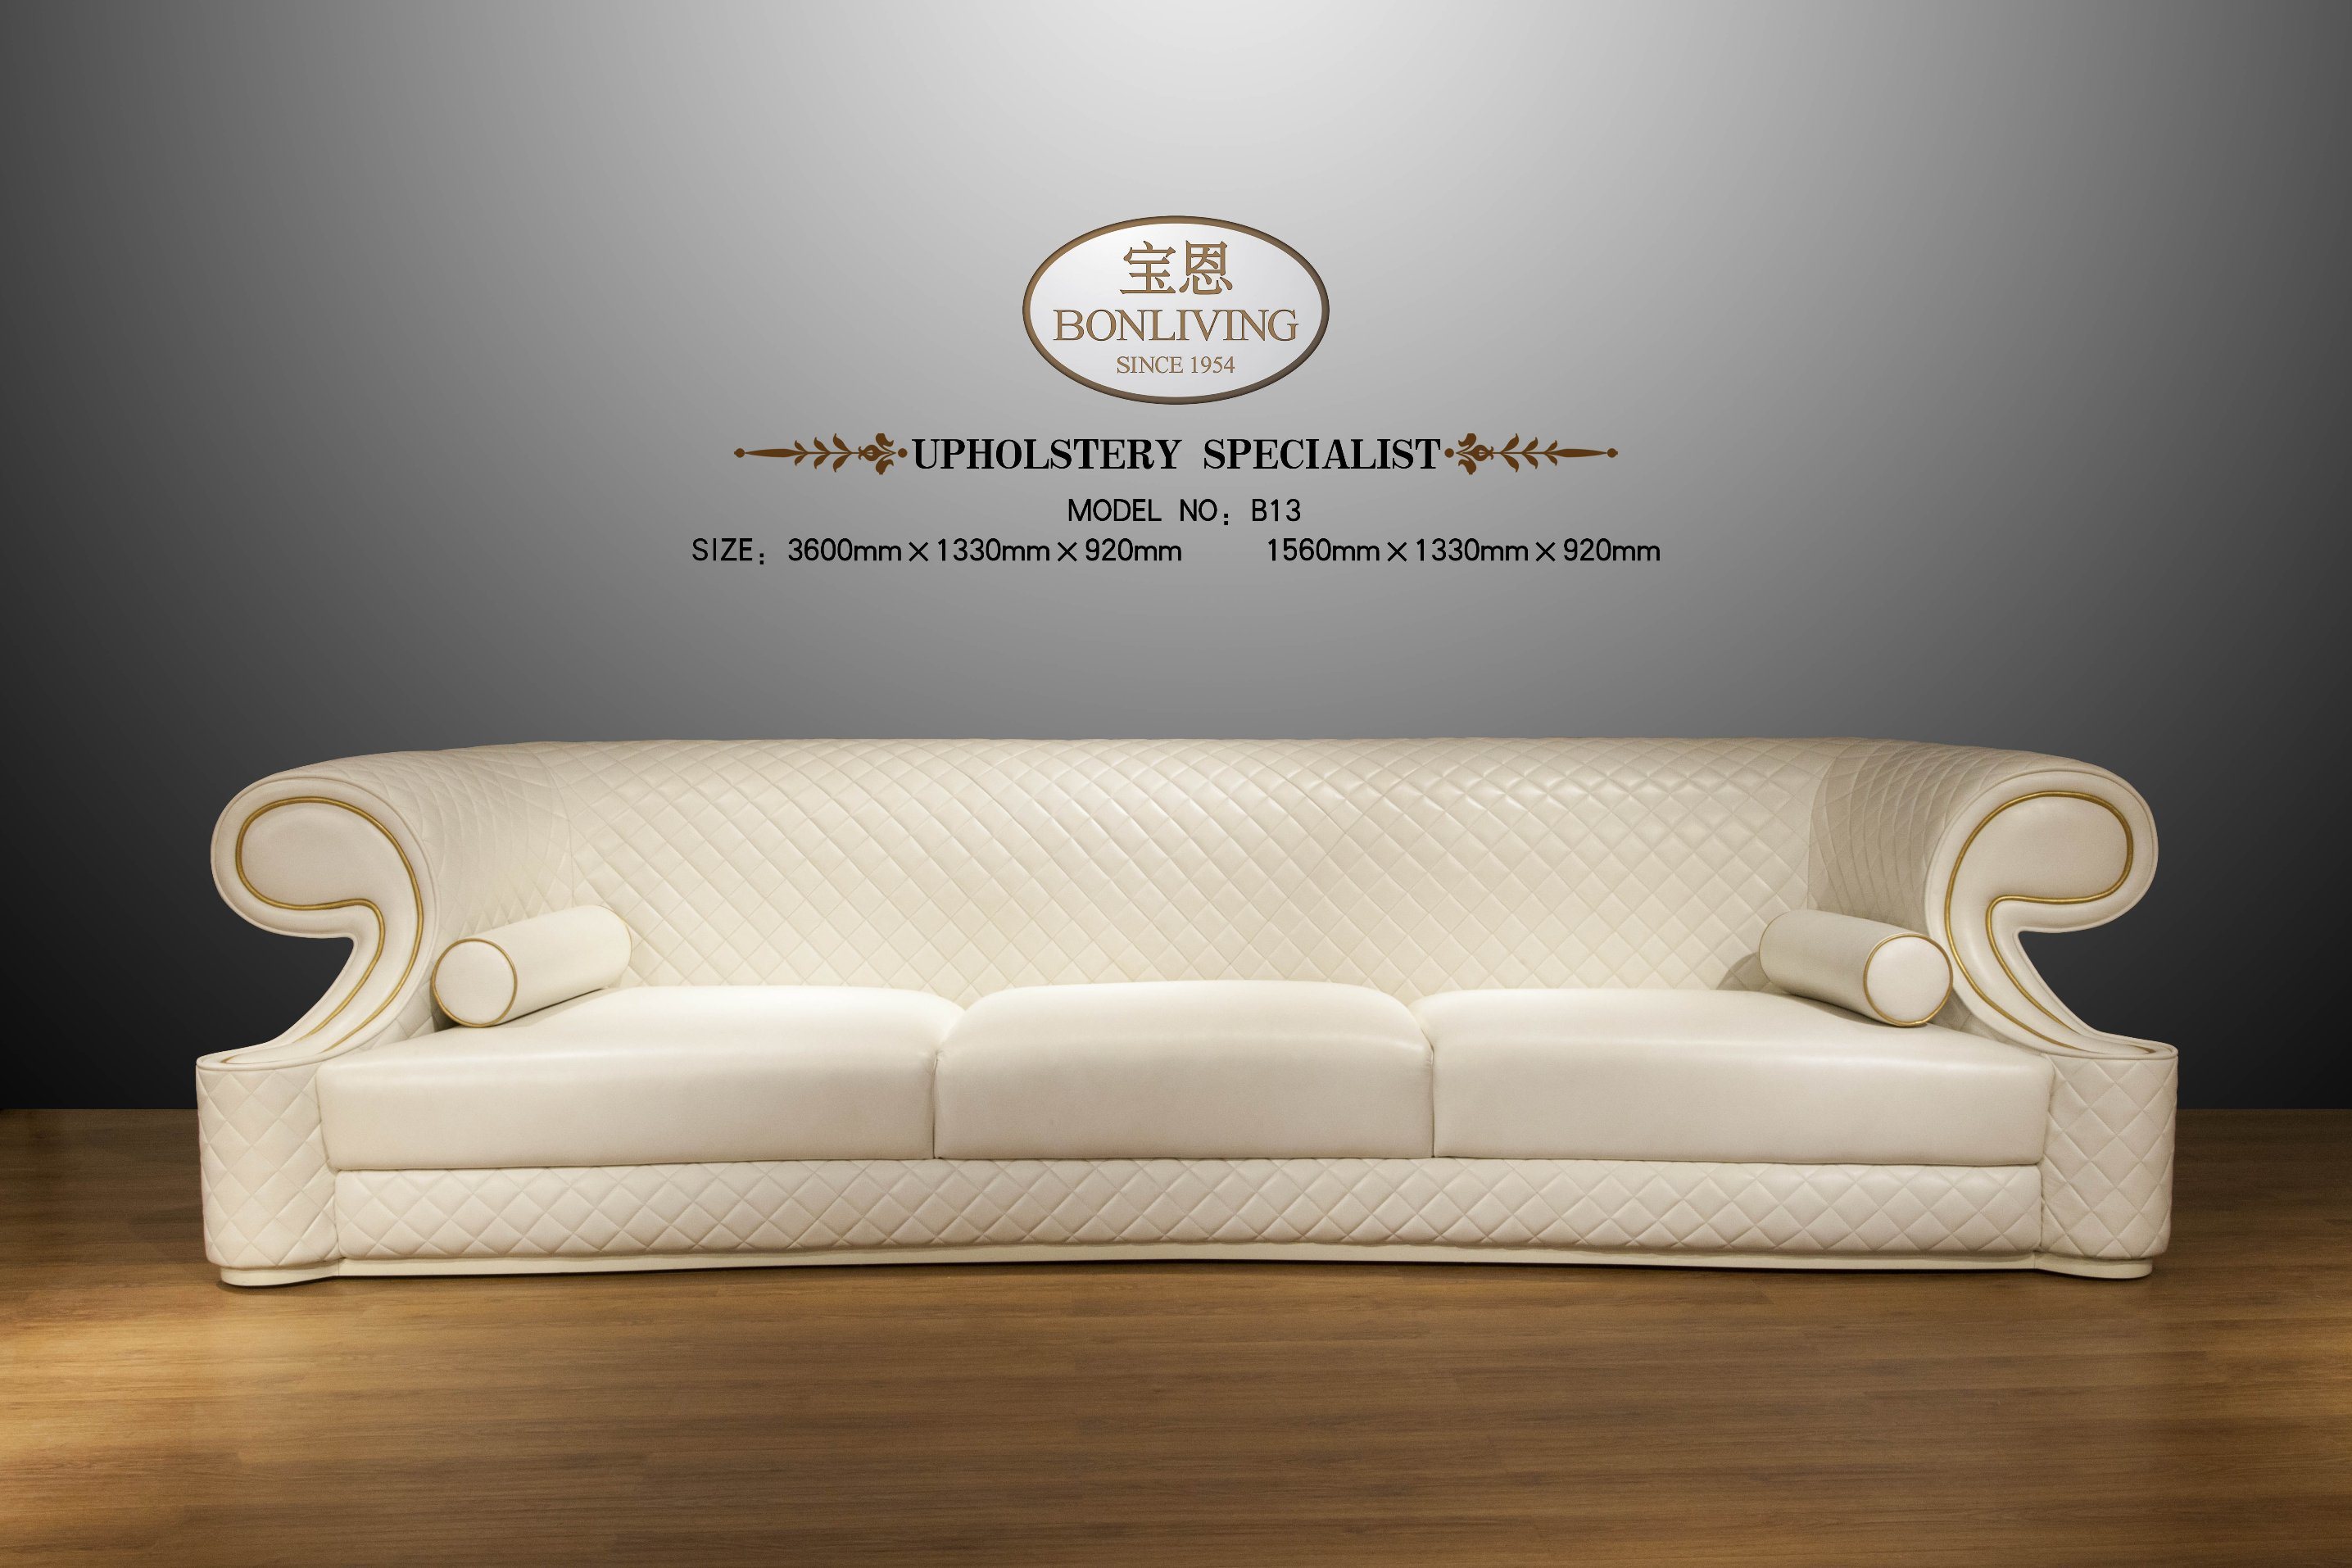 White Color Italian Design Home Living Furniture